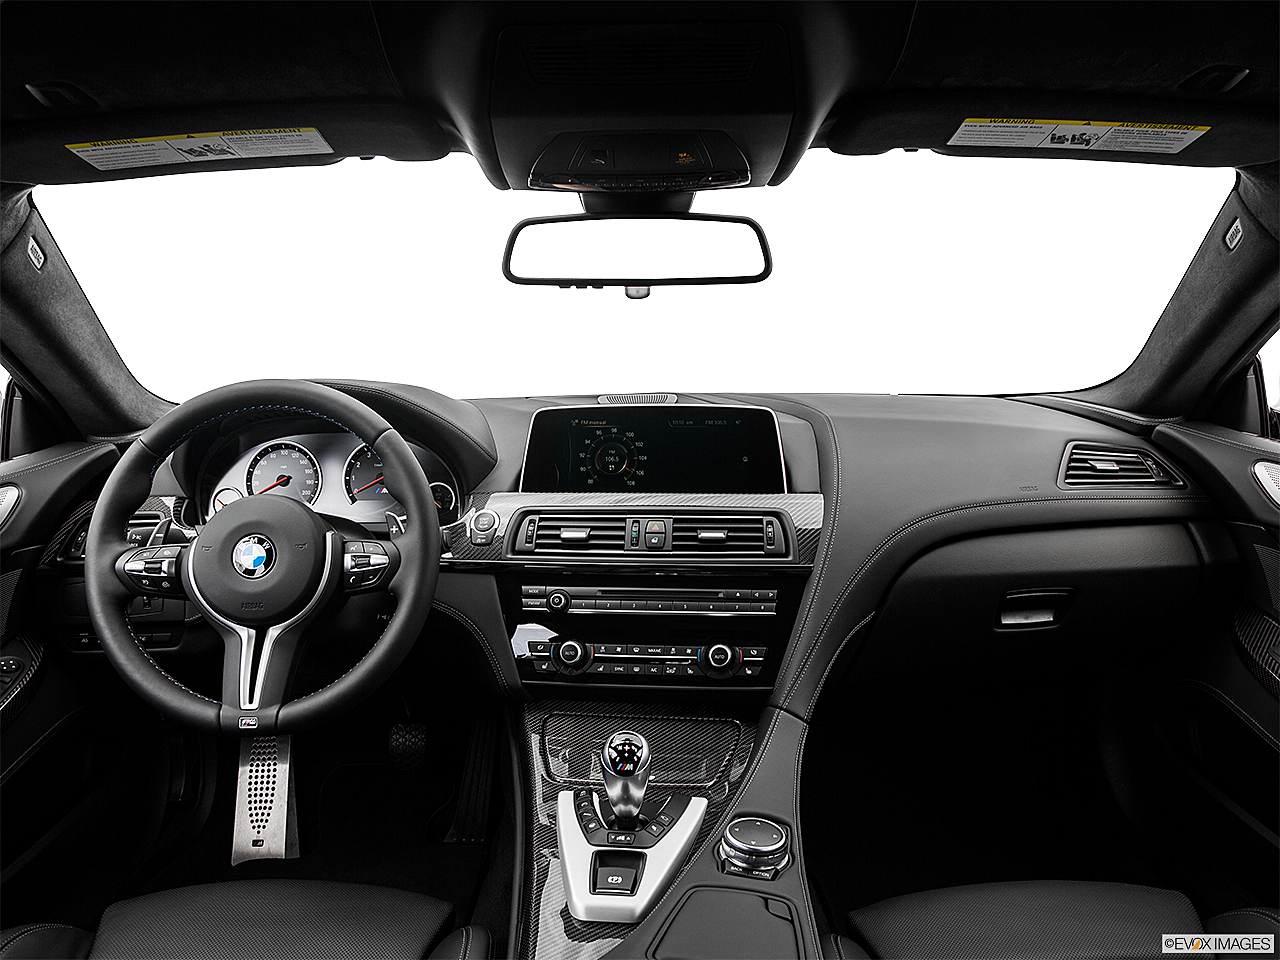 2016 BMW M6 Gran Coupe 4dr Sedan - Research - GrooveCar